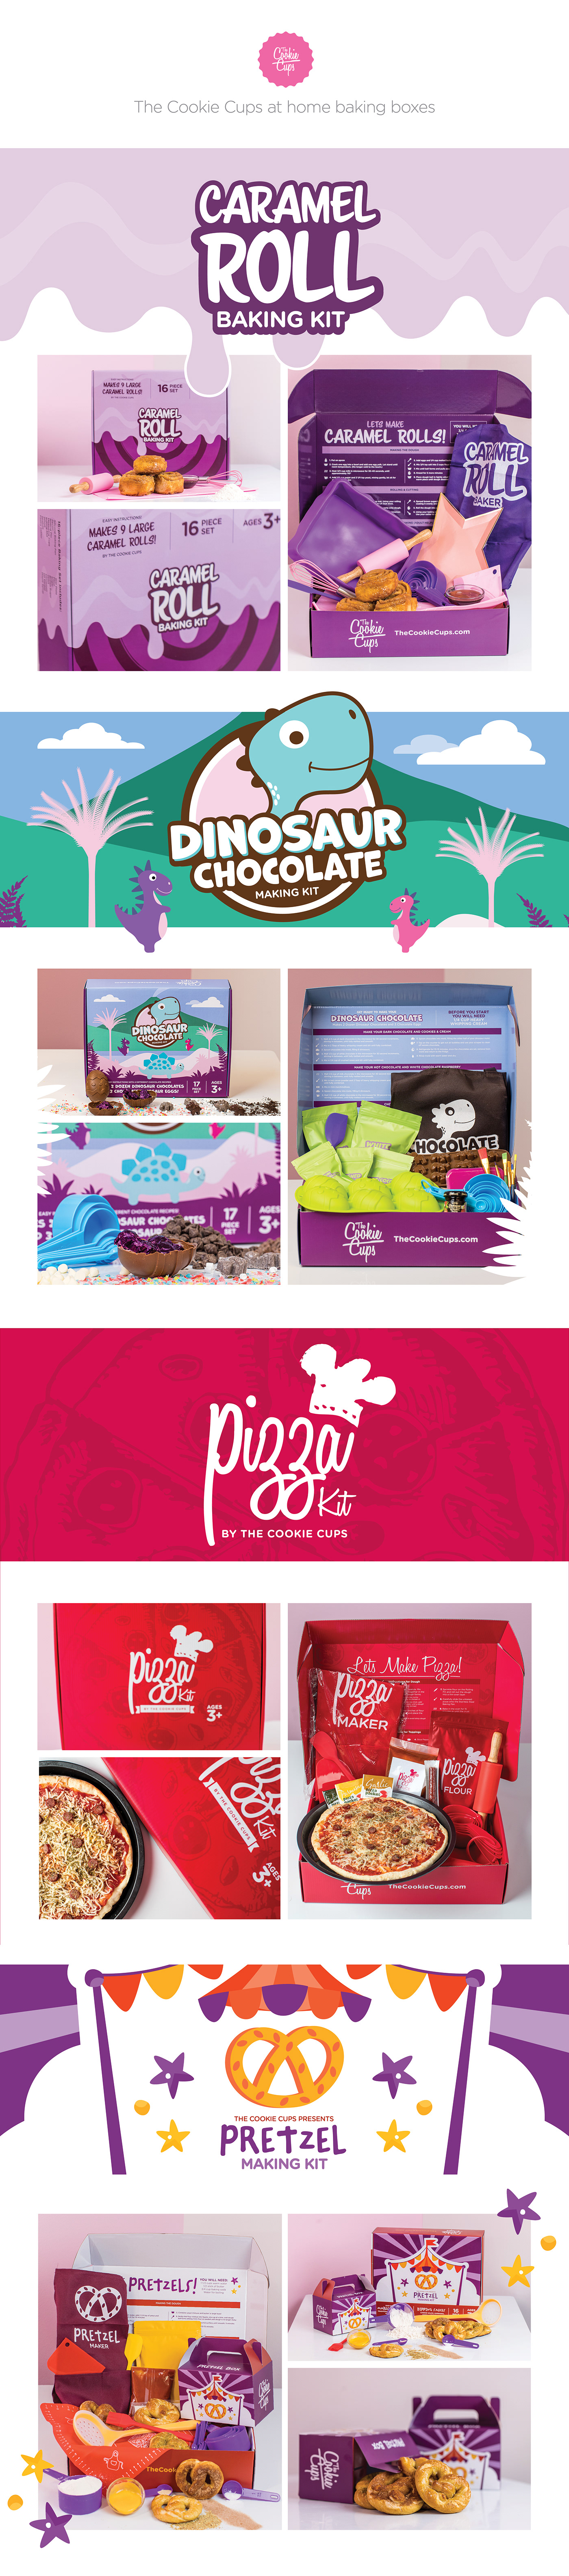 baking children baking chocolate cinnamon rolls Food  graphic design  Packaging Pizza pretzel packaging